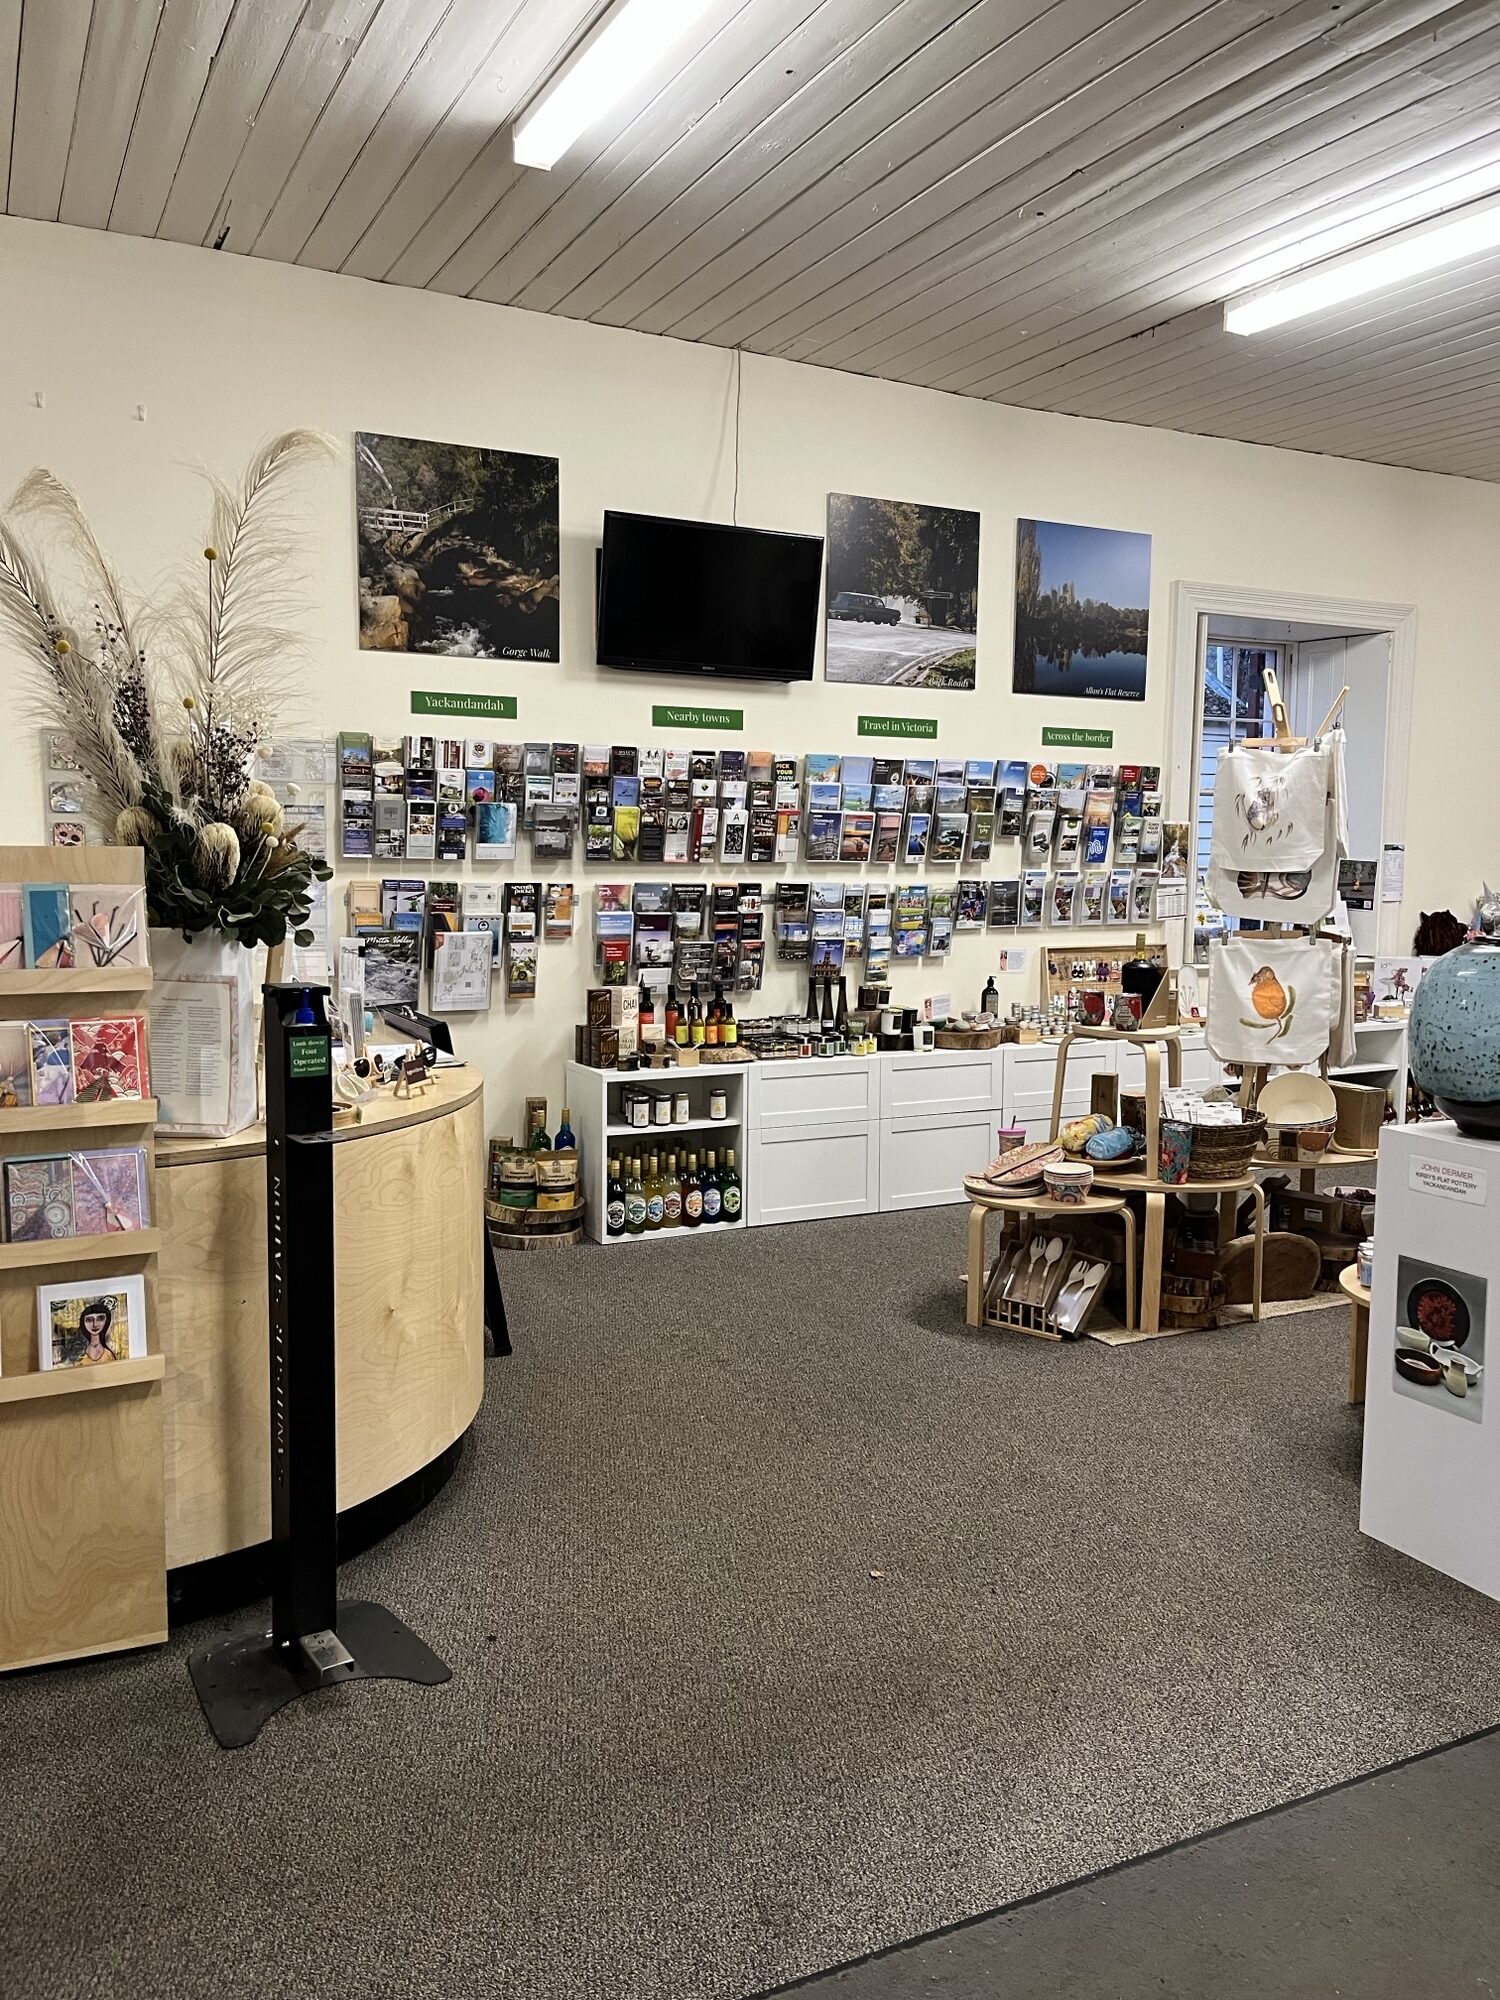 Inside visitor information centre, customer service desk and wall of brochures.